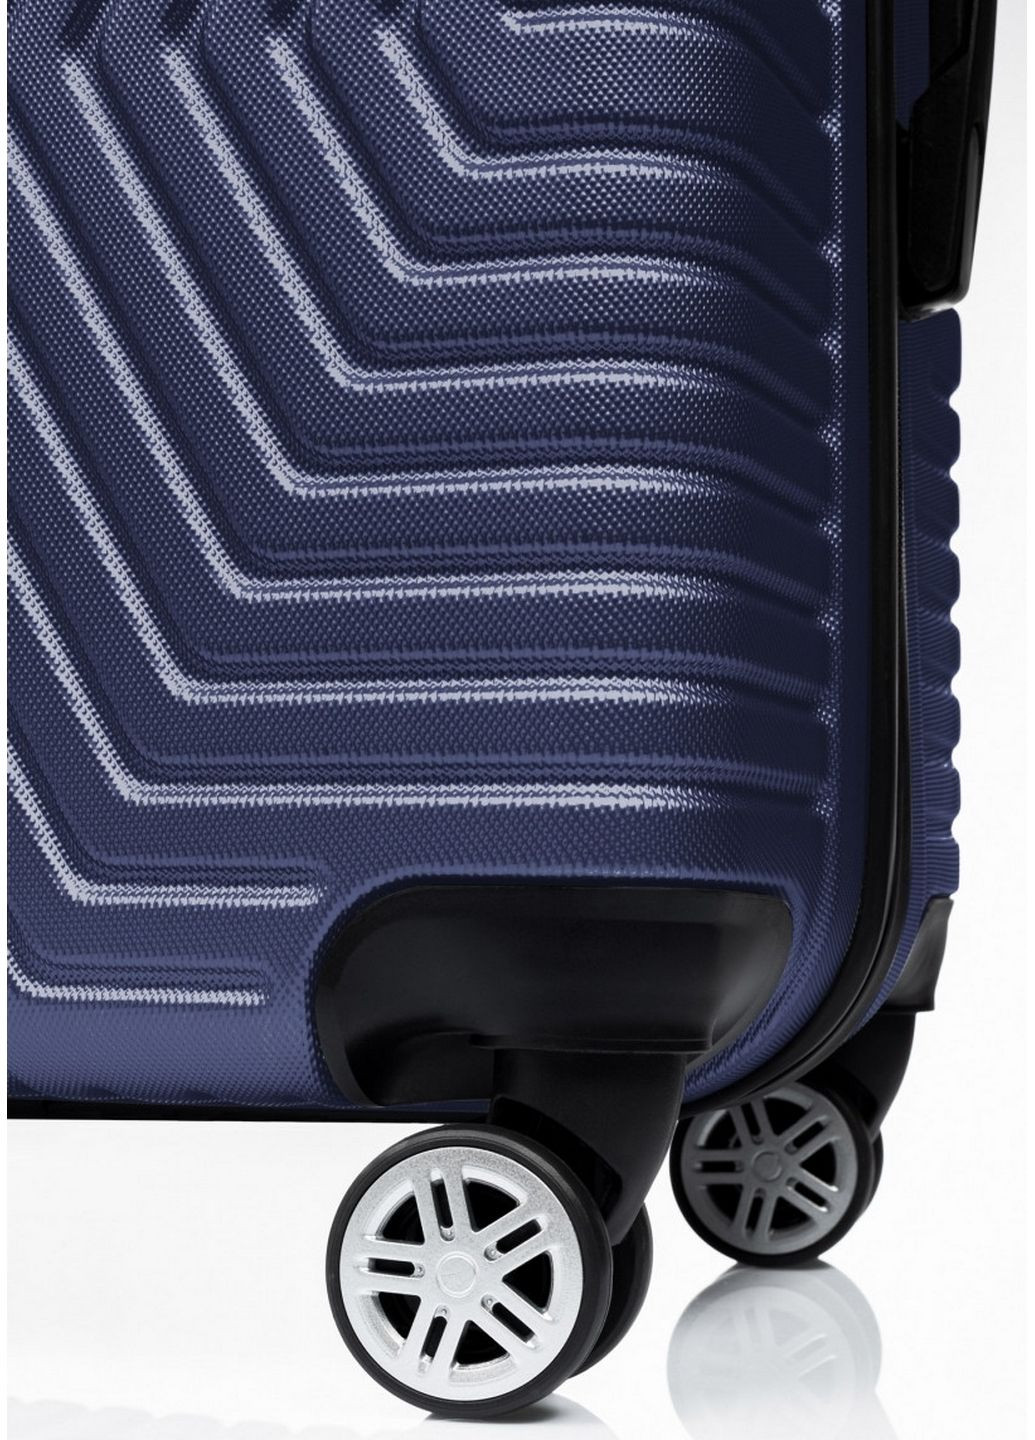 Пластиковый чемодан на колесах средний размер 70L GD Polo (288184731)